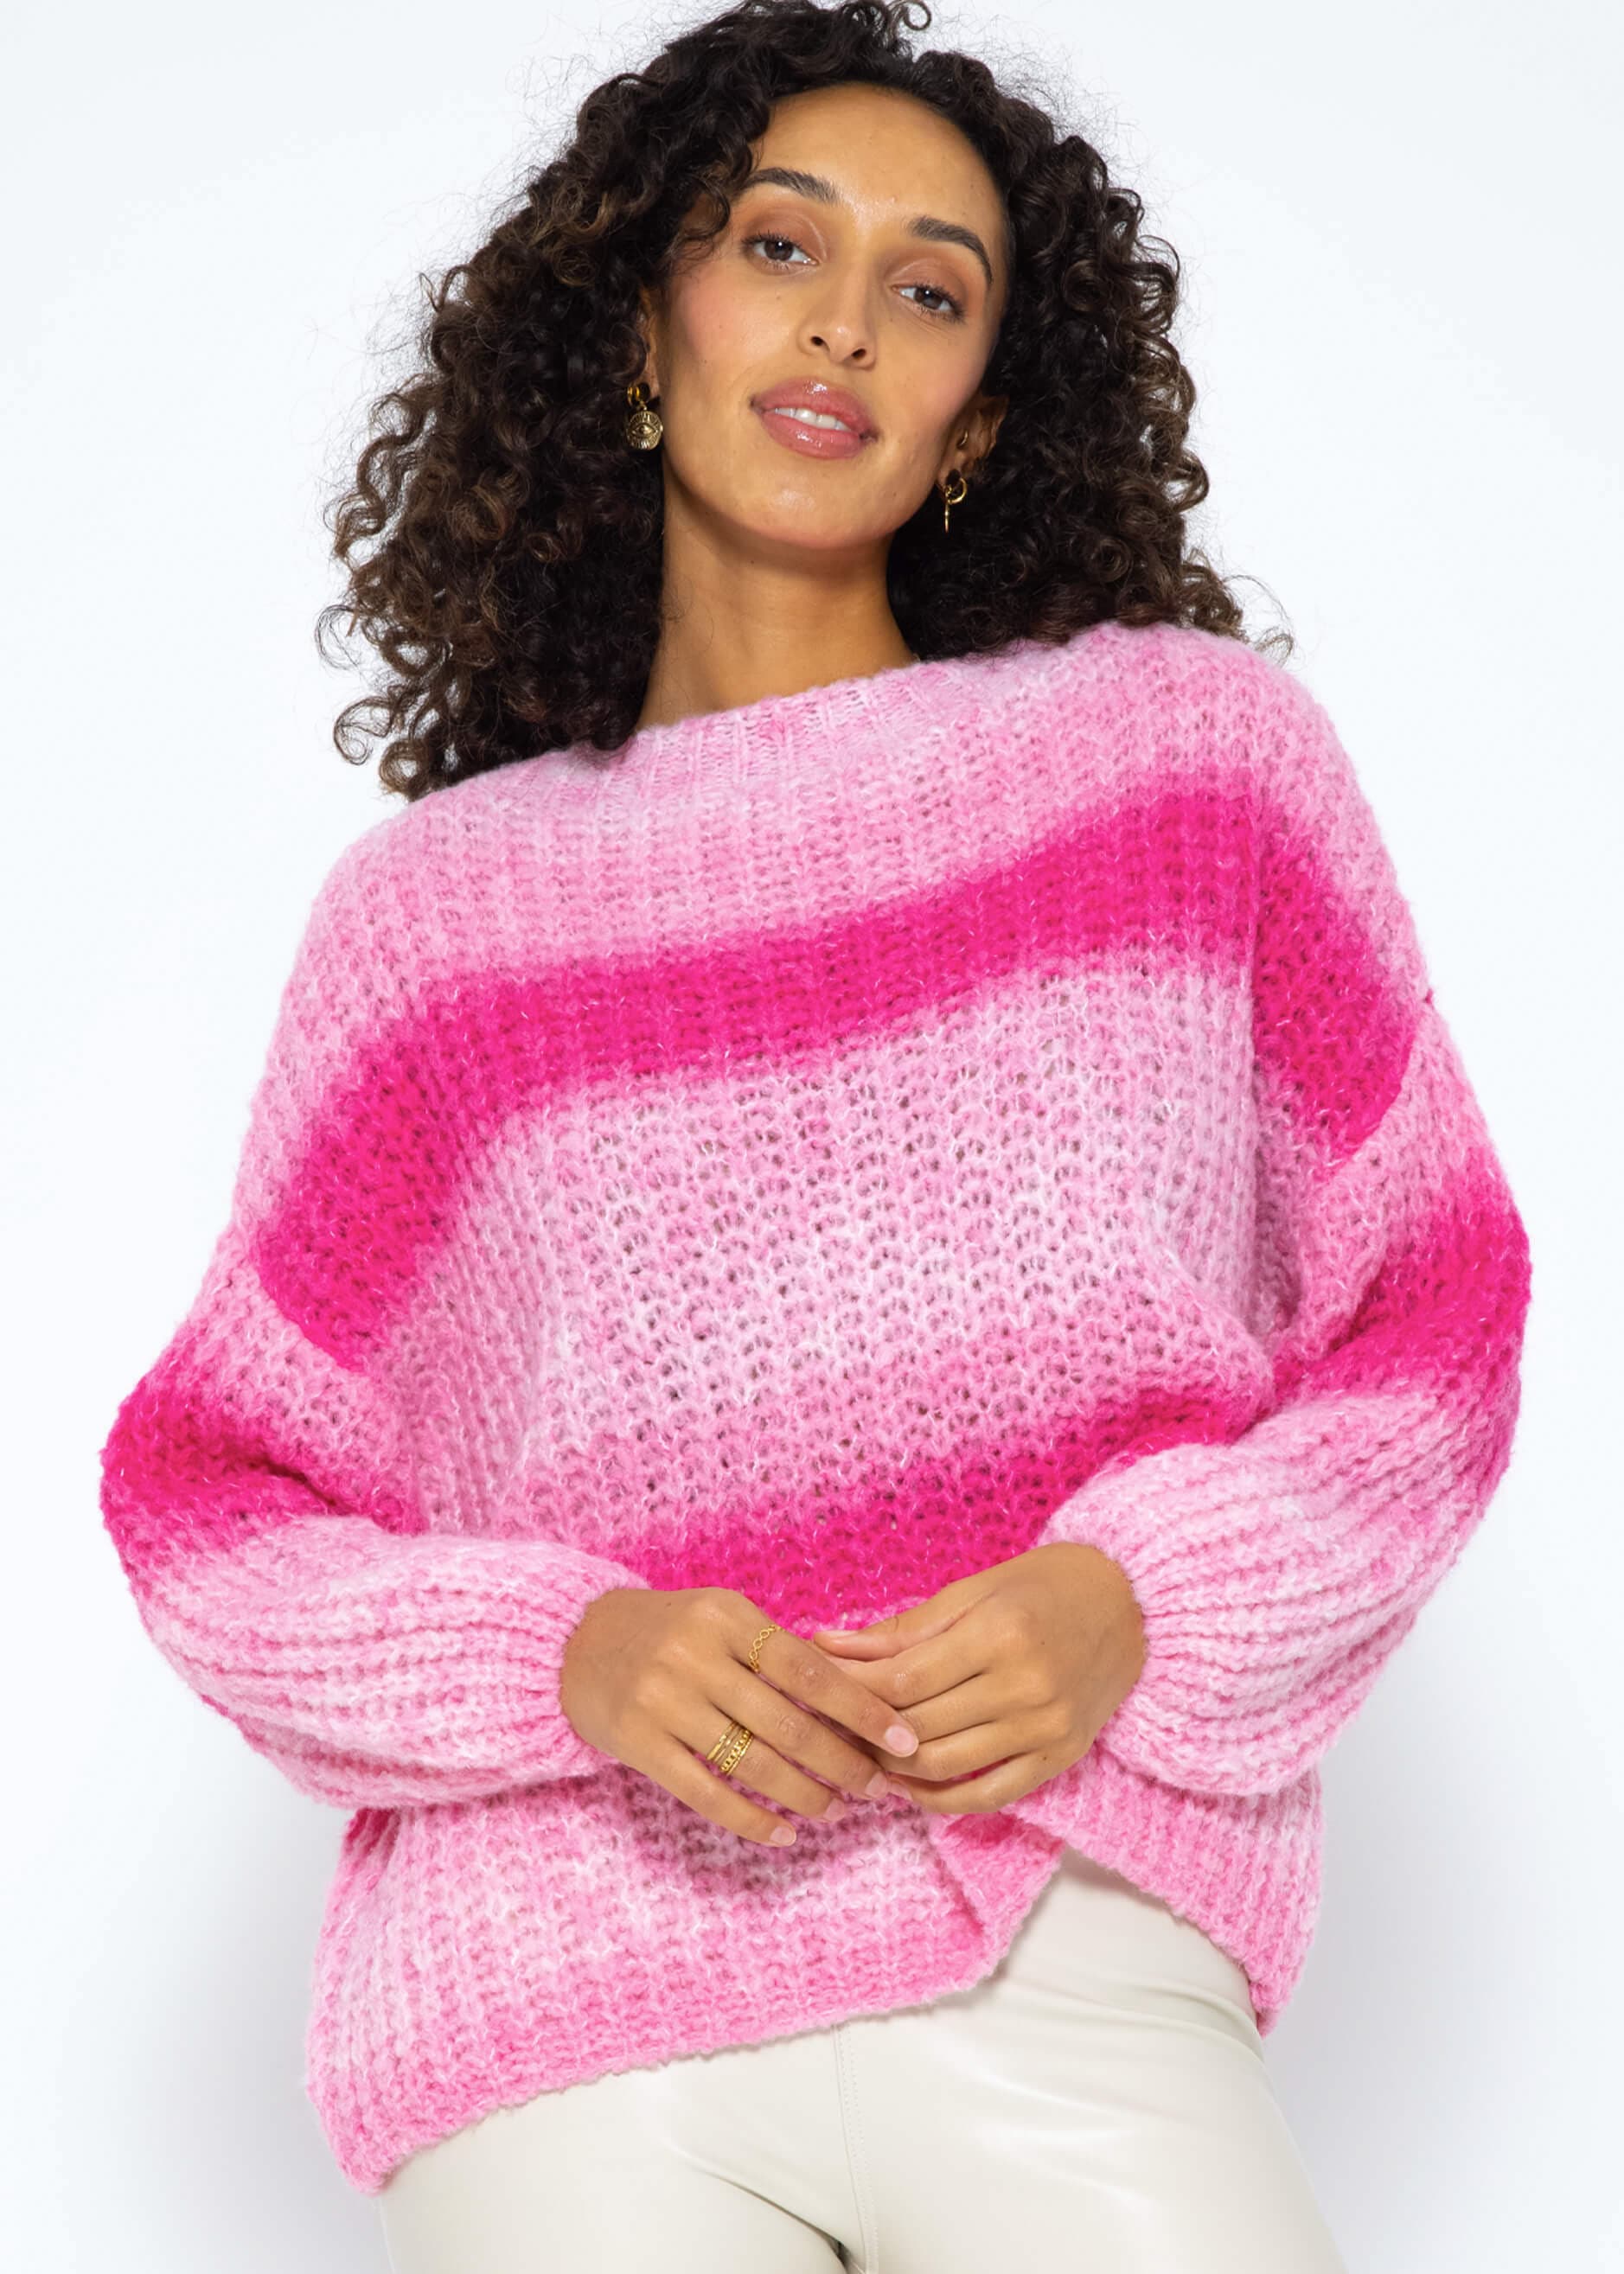 Strickpullover mit Farbverlauf - rosa | Pullover | Bekleidung | SASSYCLASSY